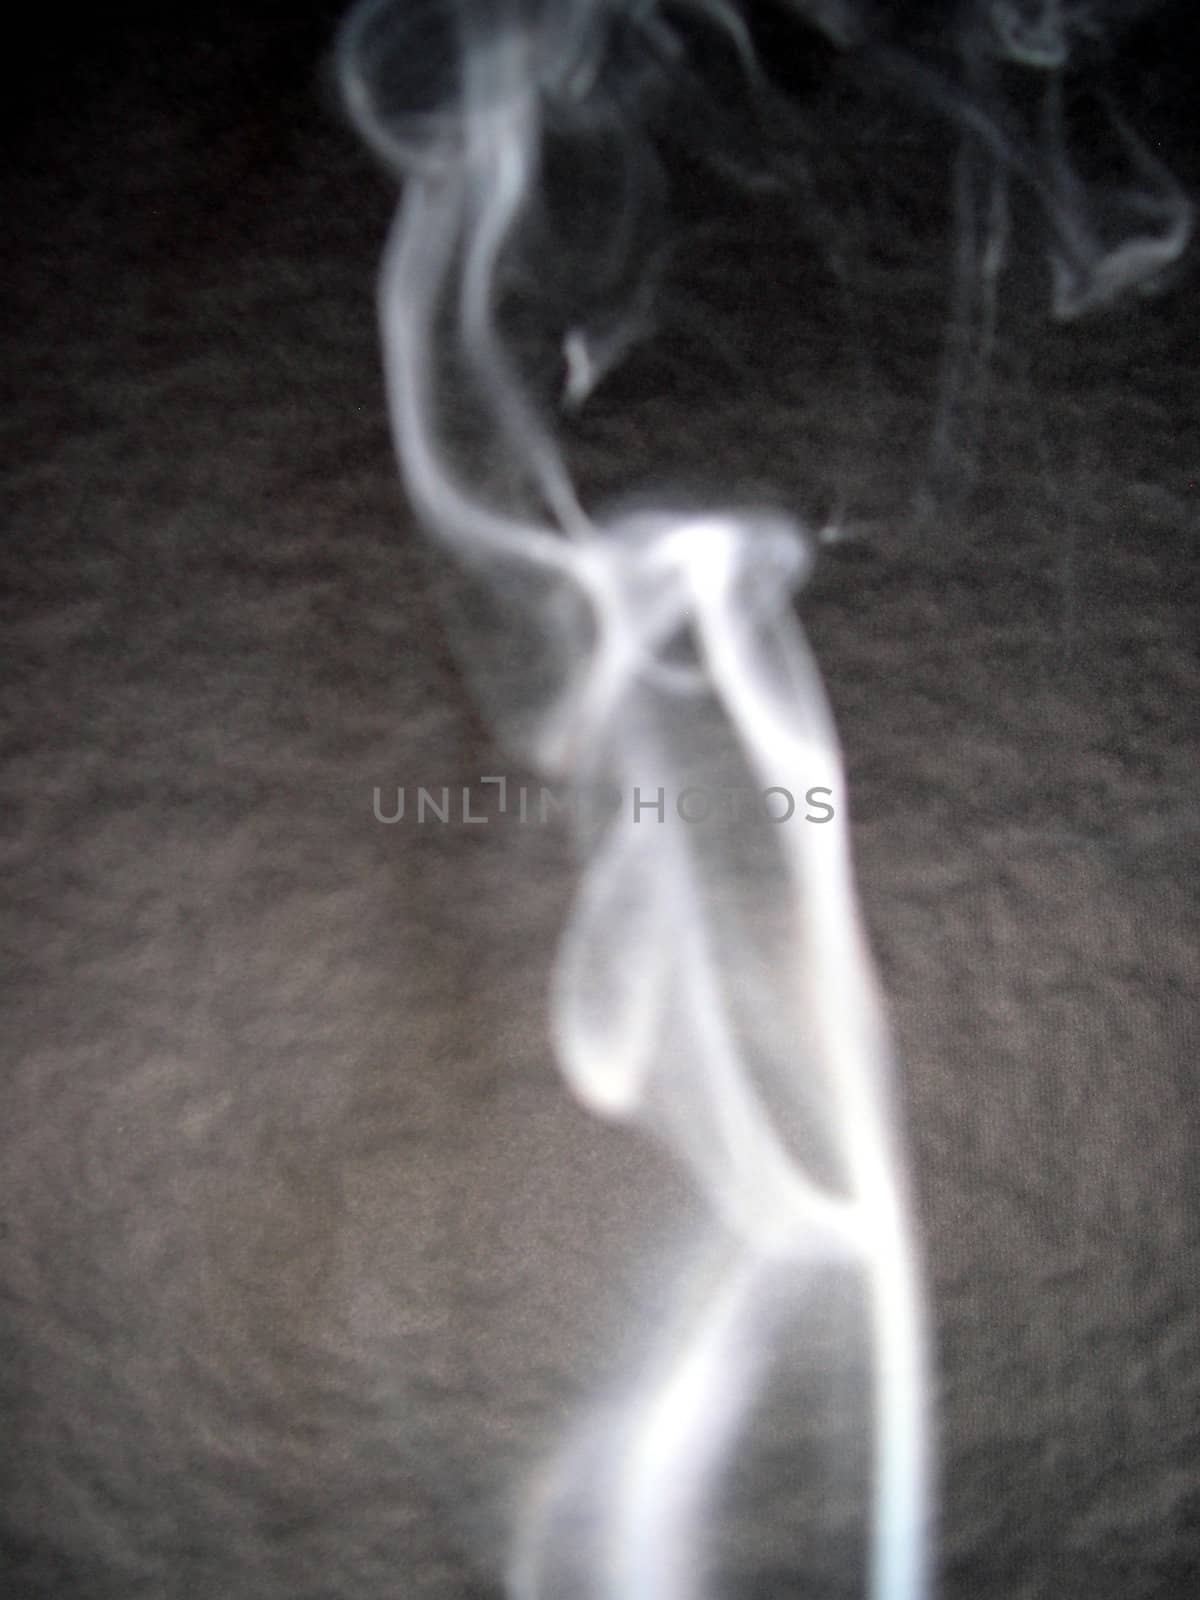 Smoke by photosbyrob